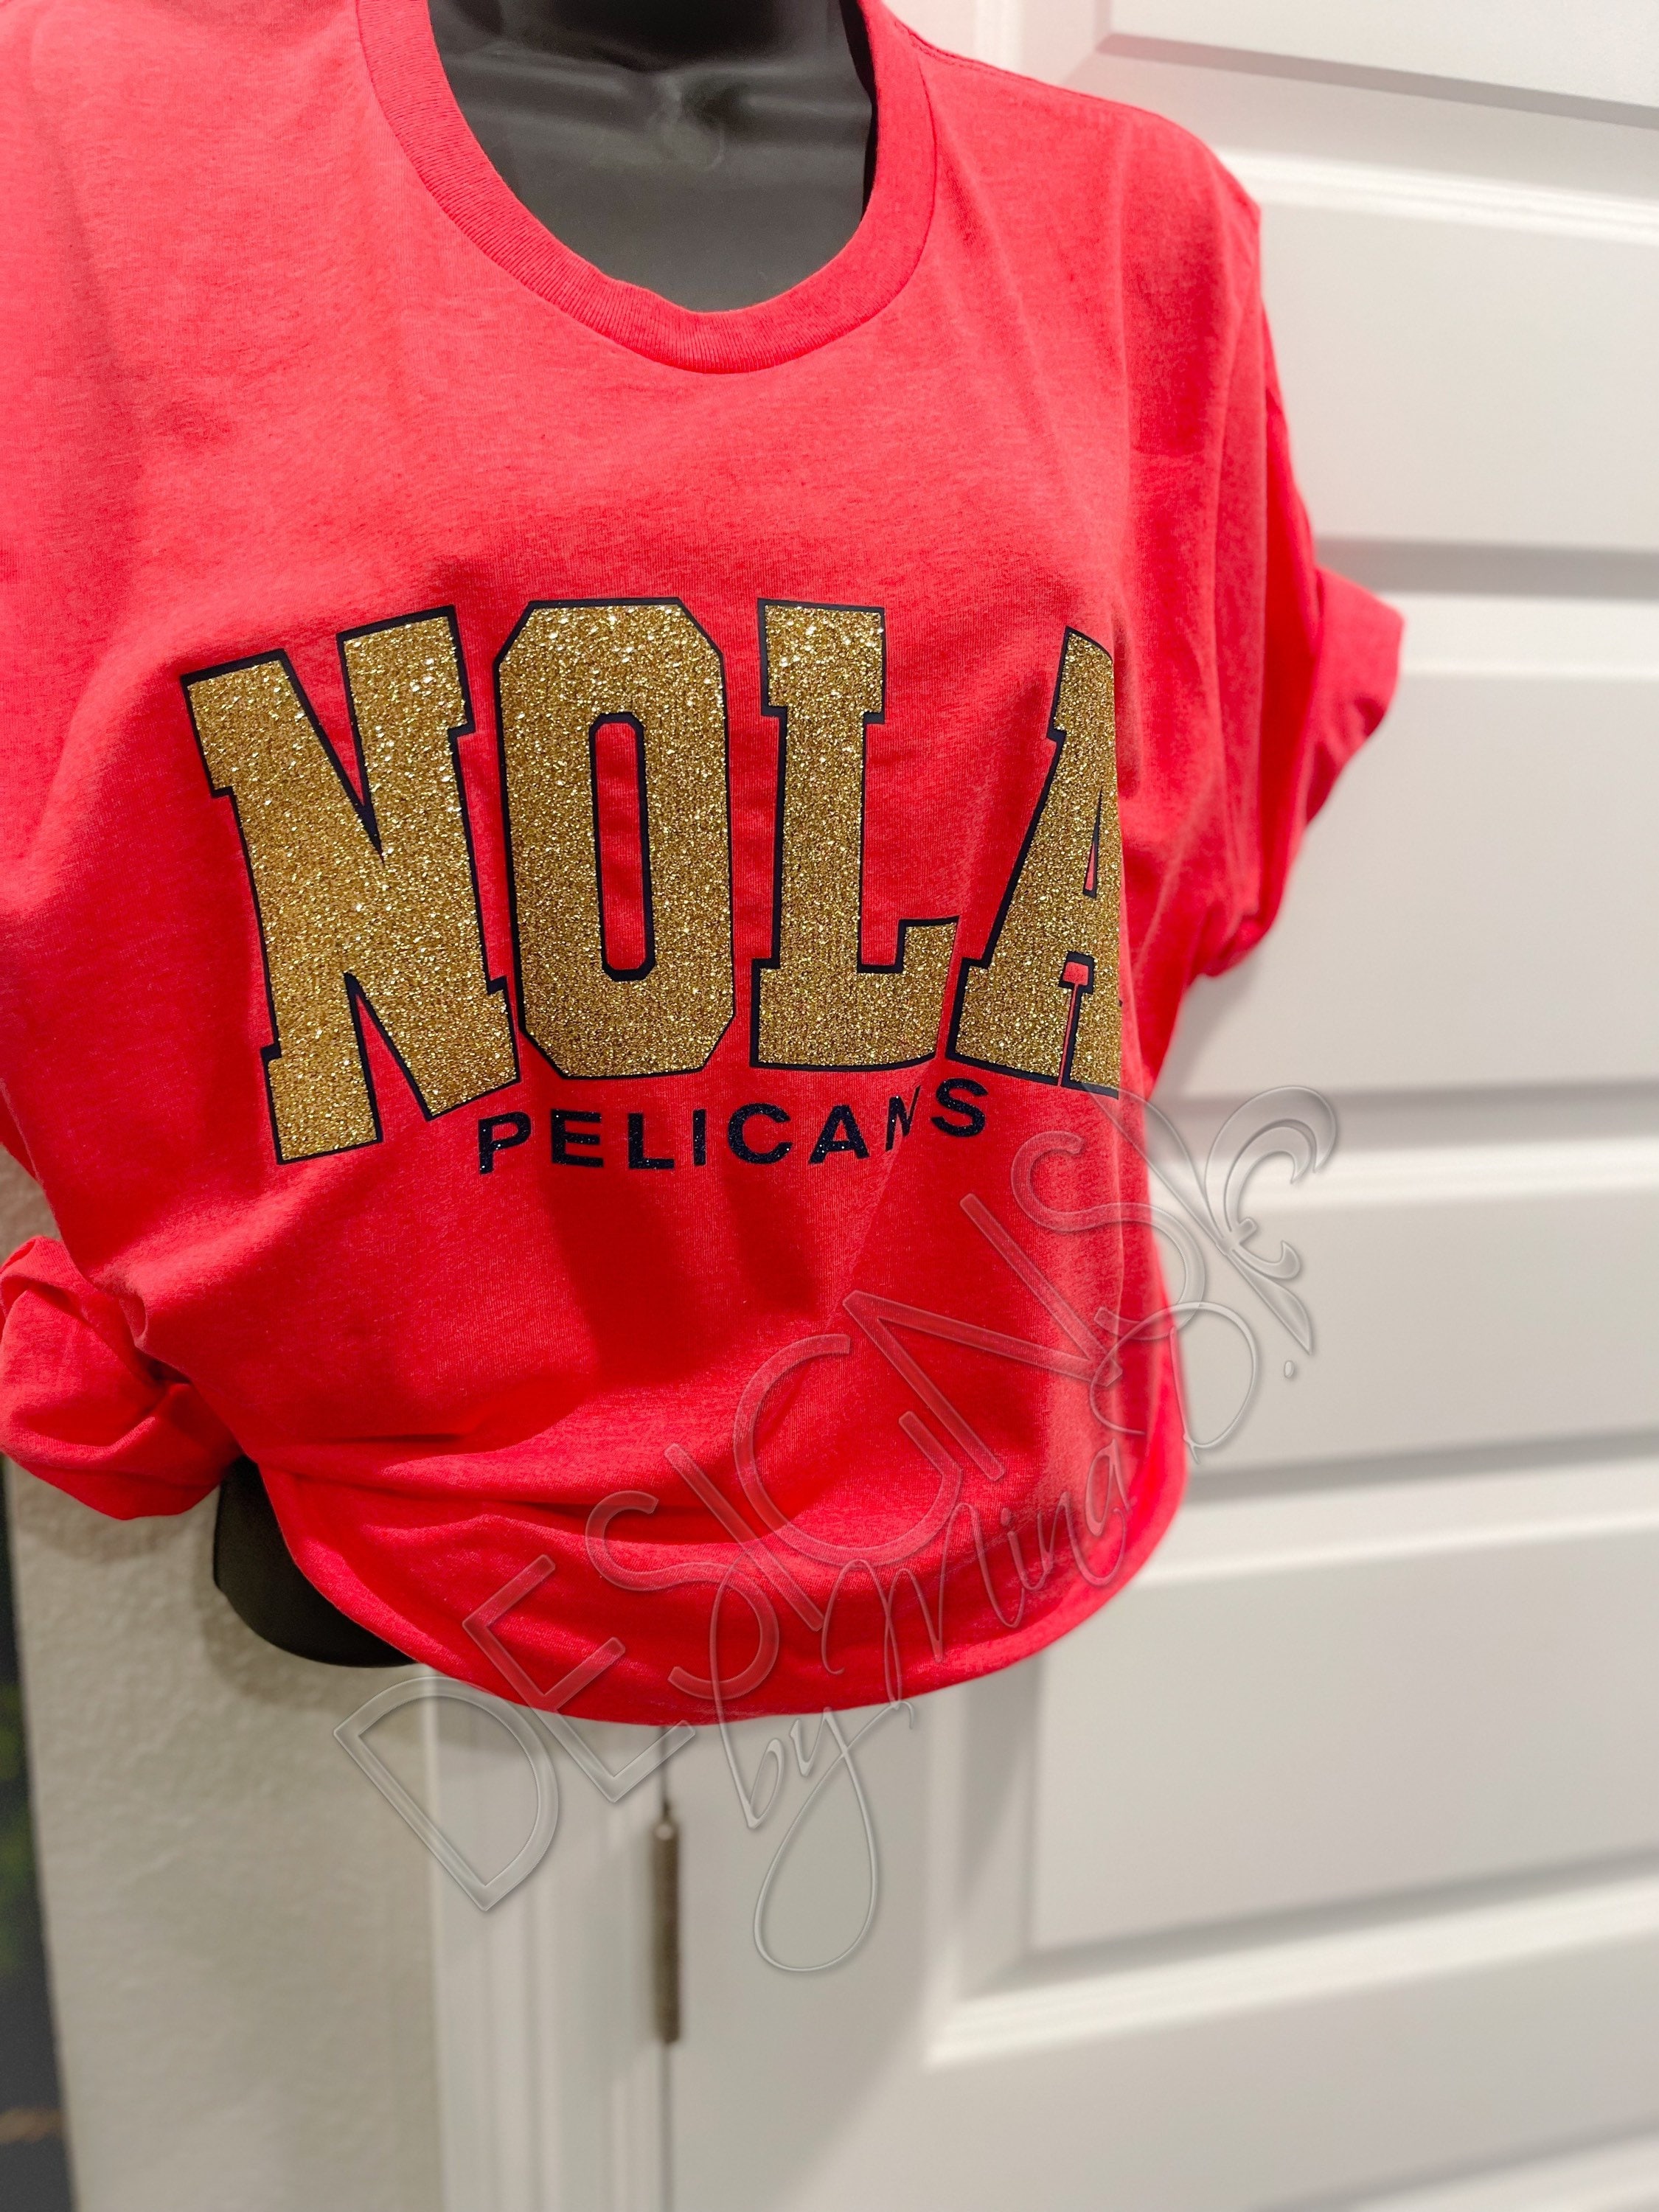 New Orleans Pelicans Mardi Gras themed concept jerseys : r/NOLAPelicans